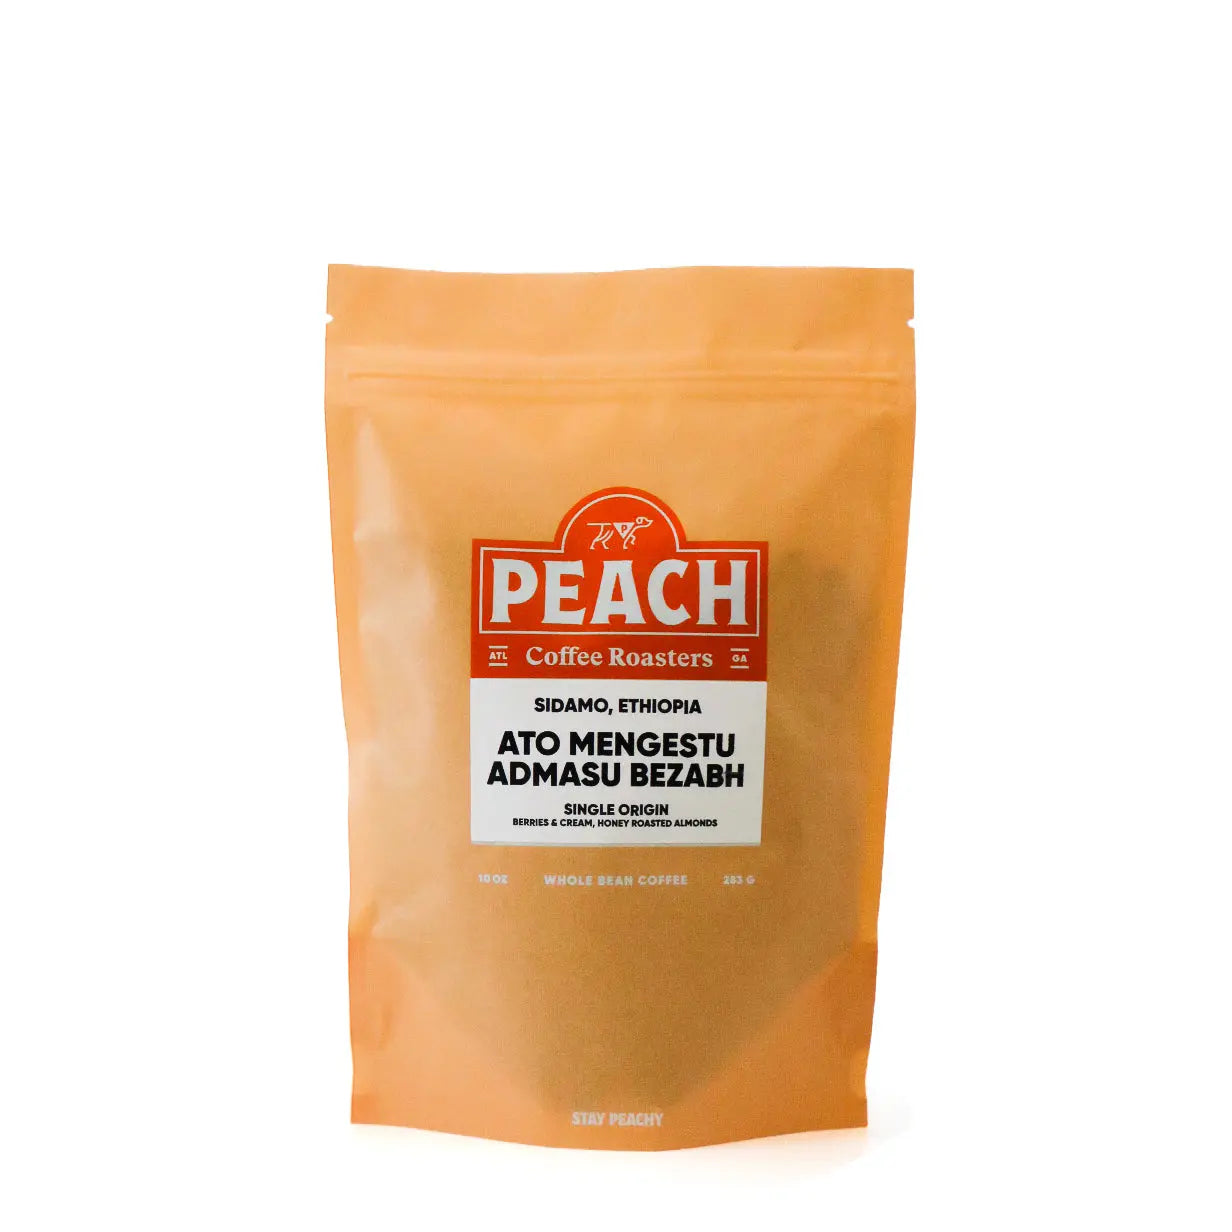 Ato Mengestu Admasu Bezabh - Medium Roast - Single Origin Peach Coffee Roasters